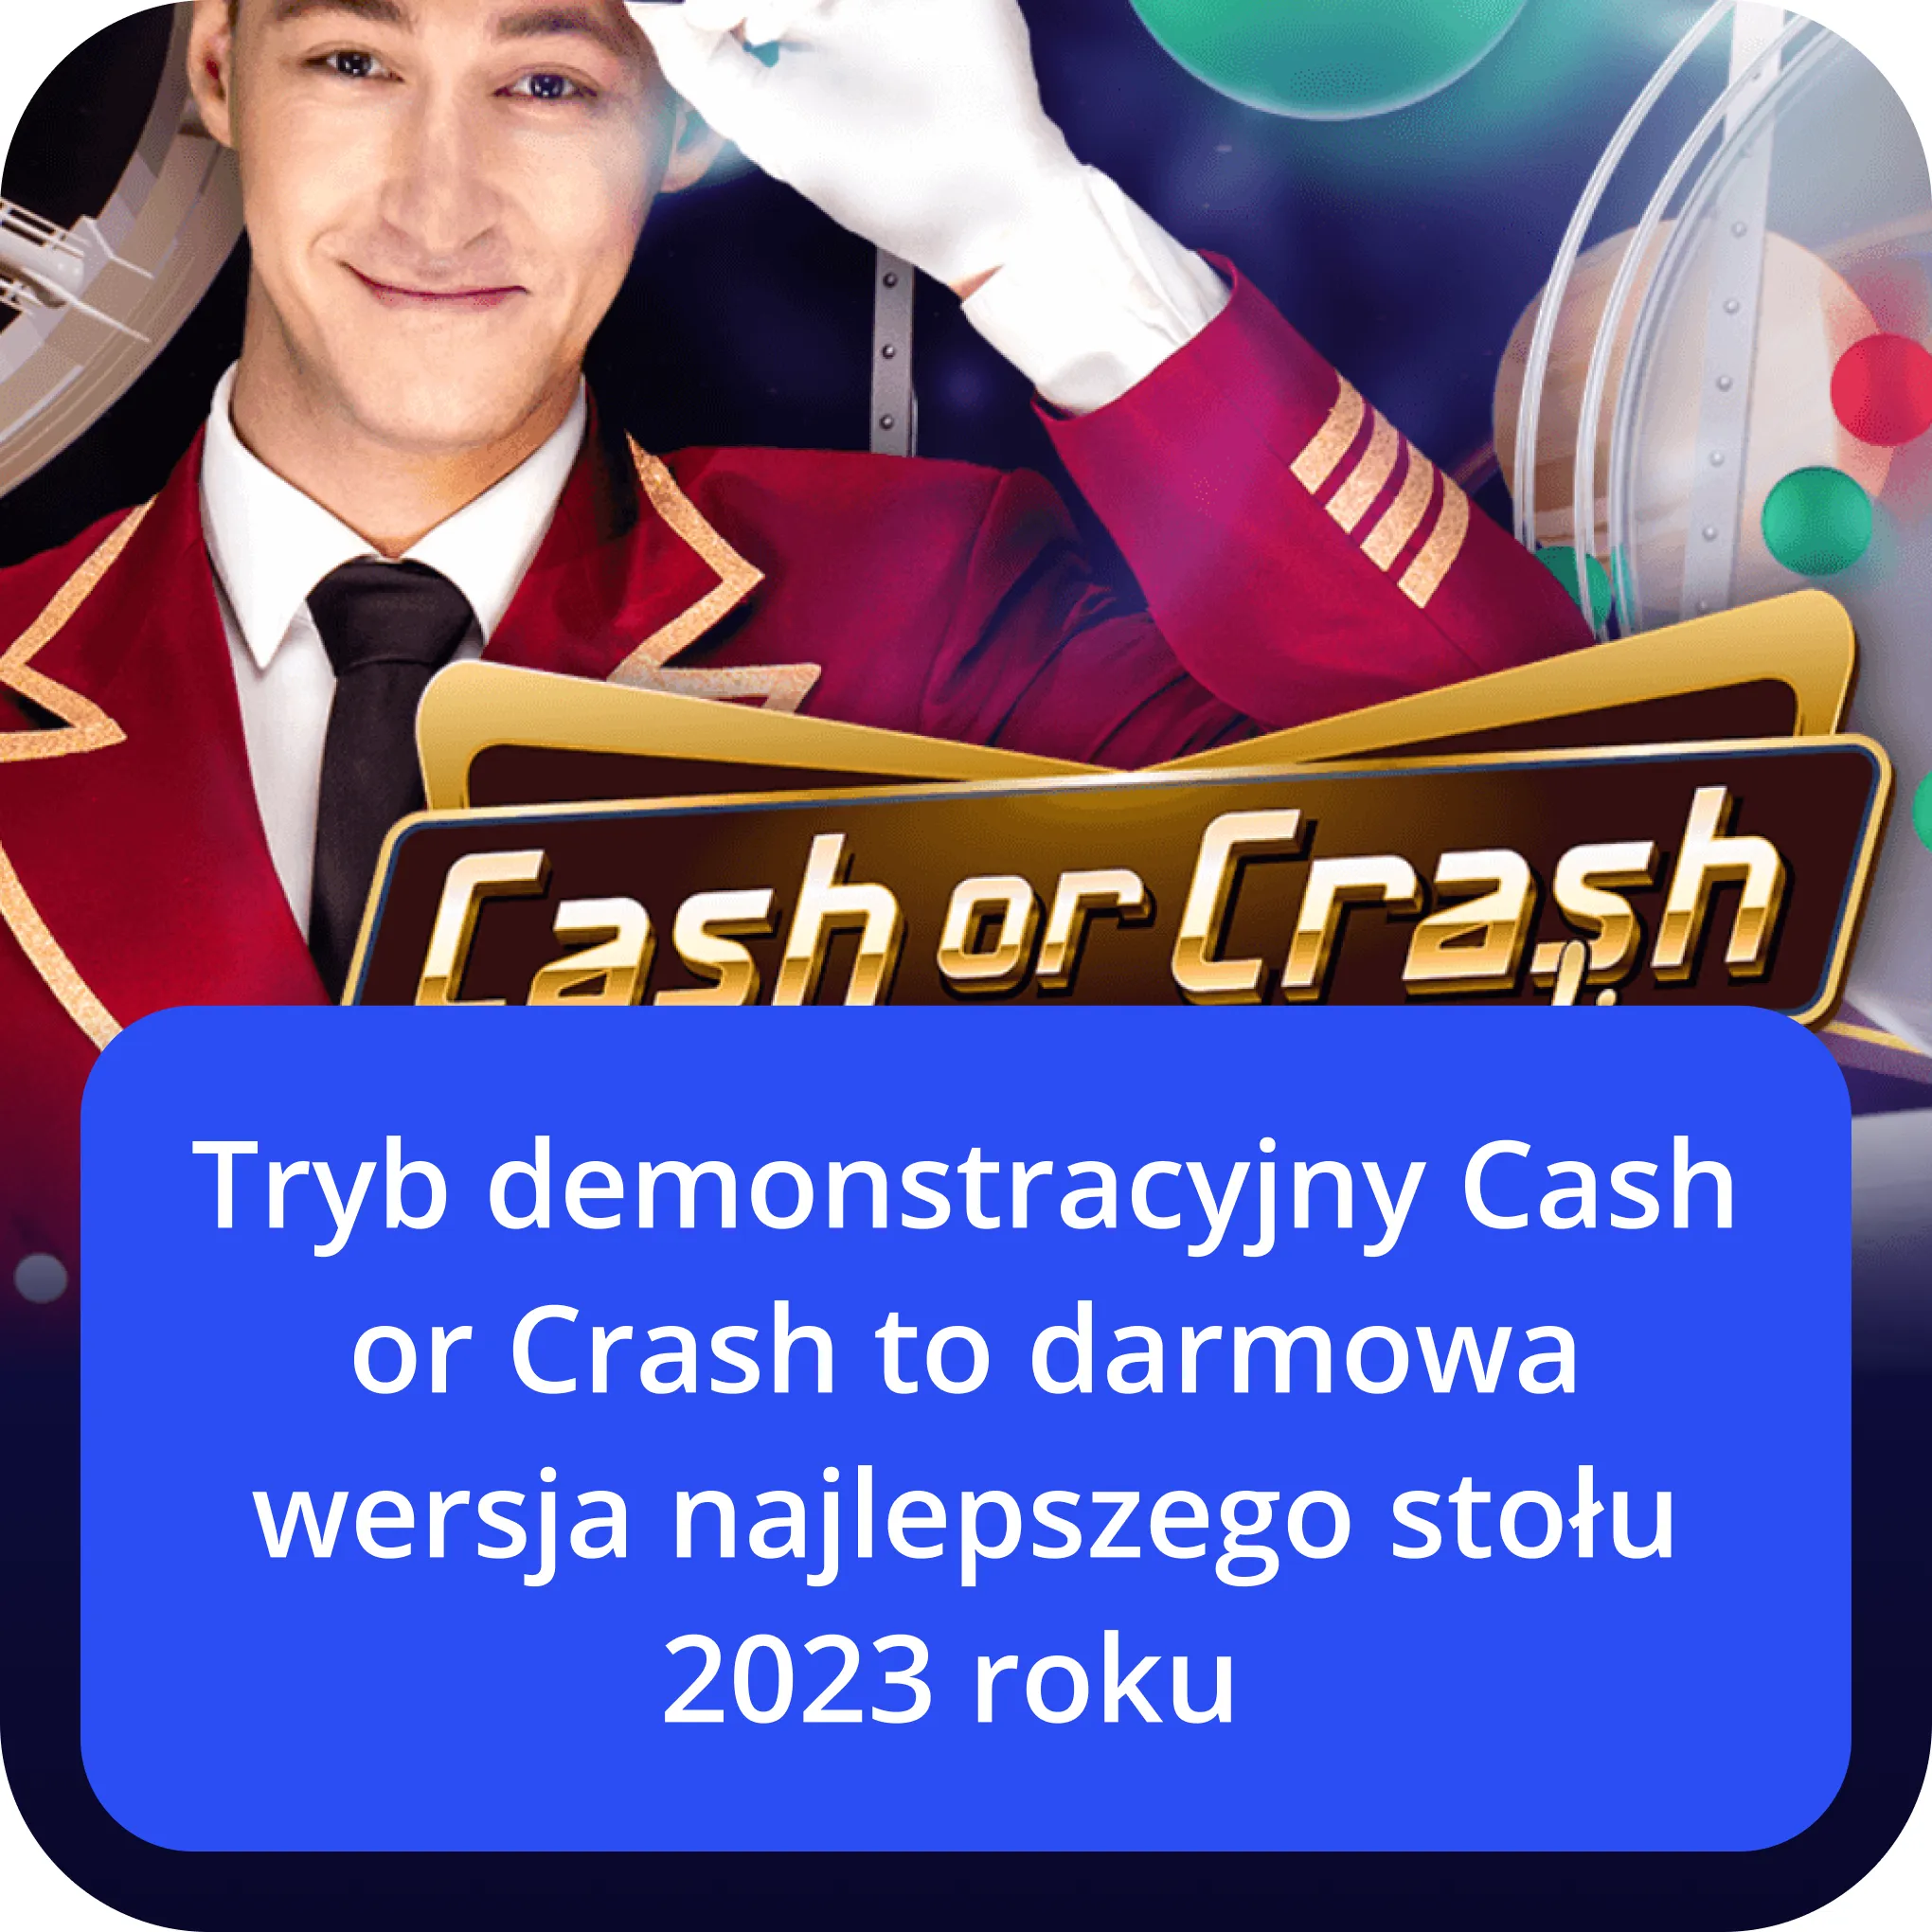 bonusy cash or crash